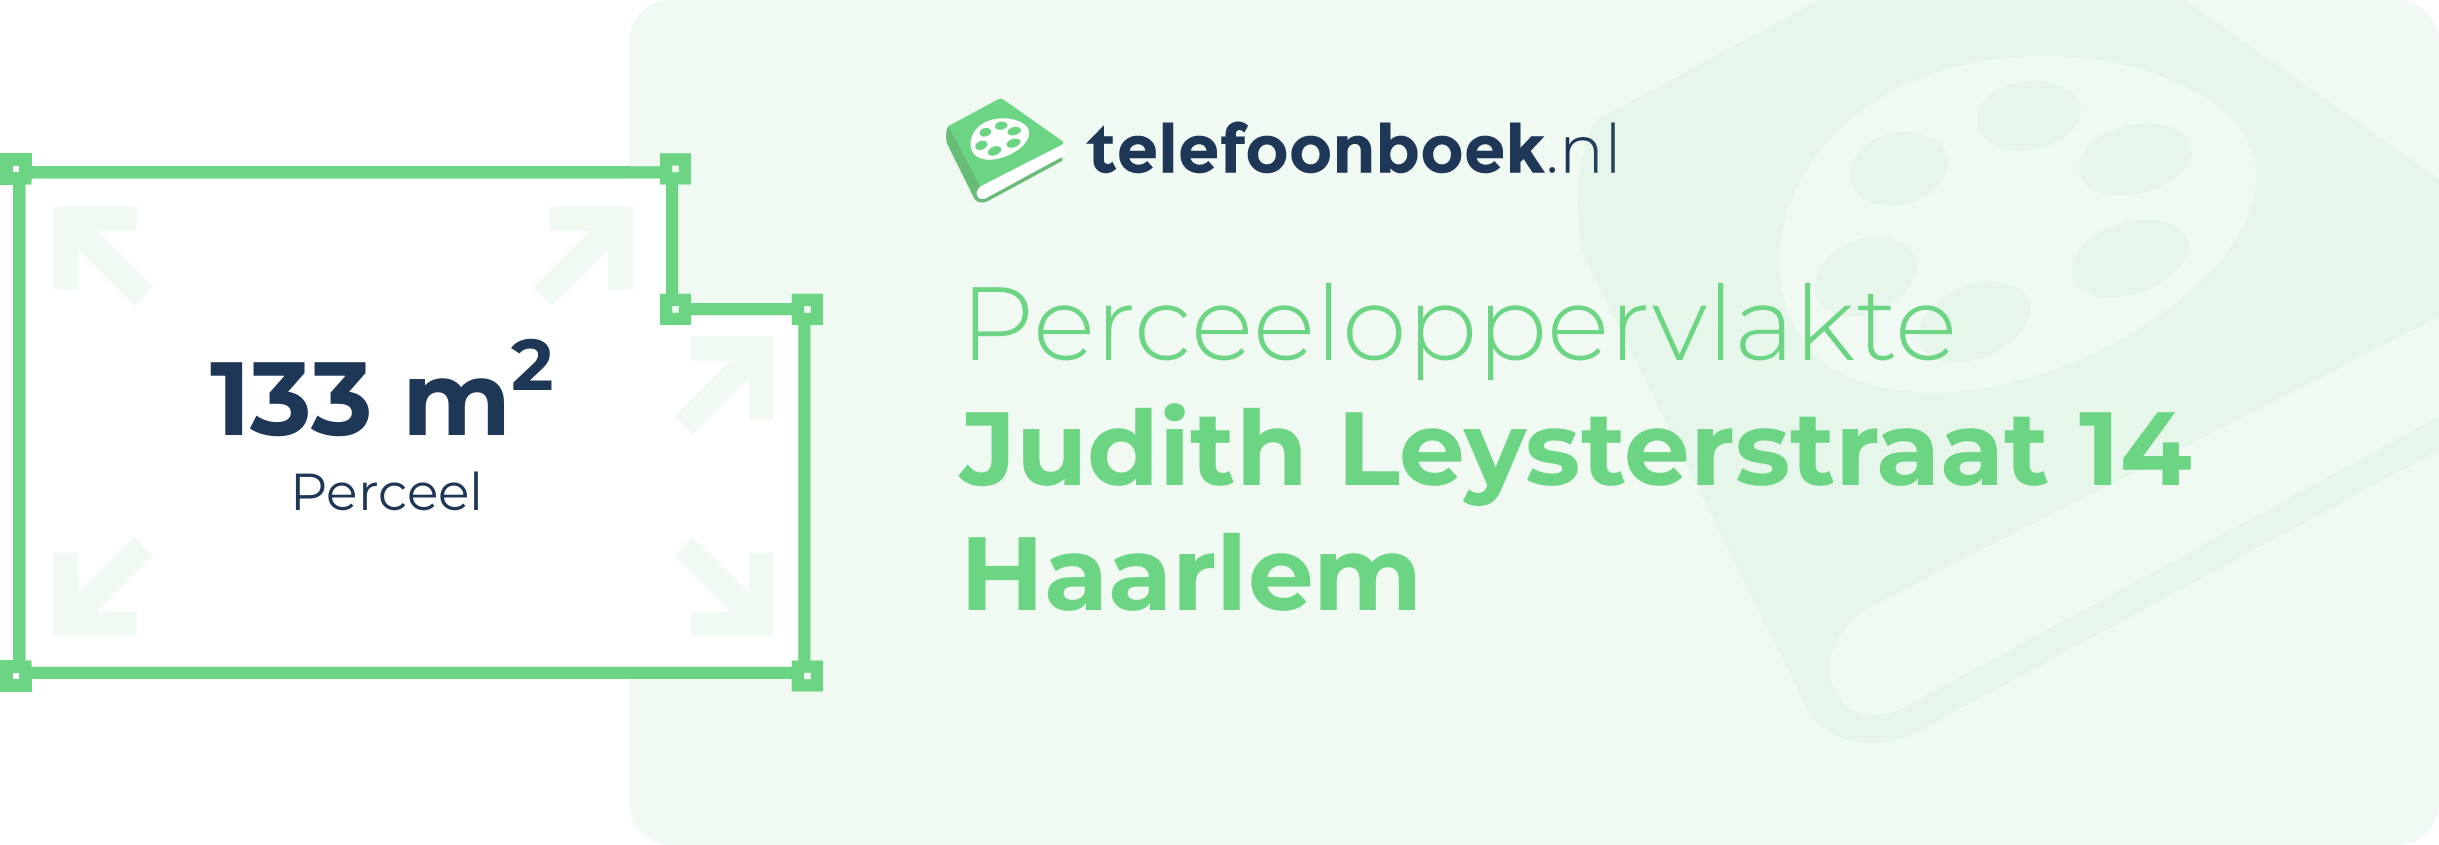 Perceeloppervlakte Judith Leysterstraat 14 Haarlem